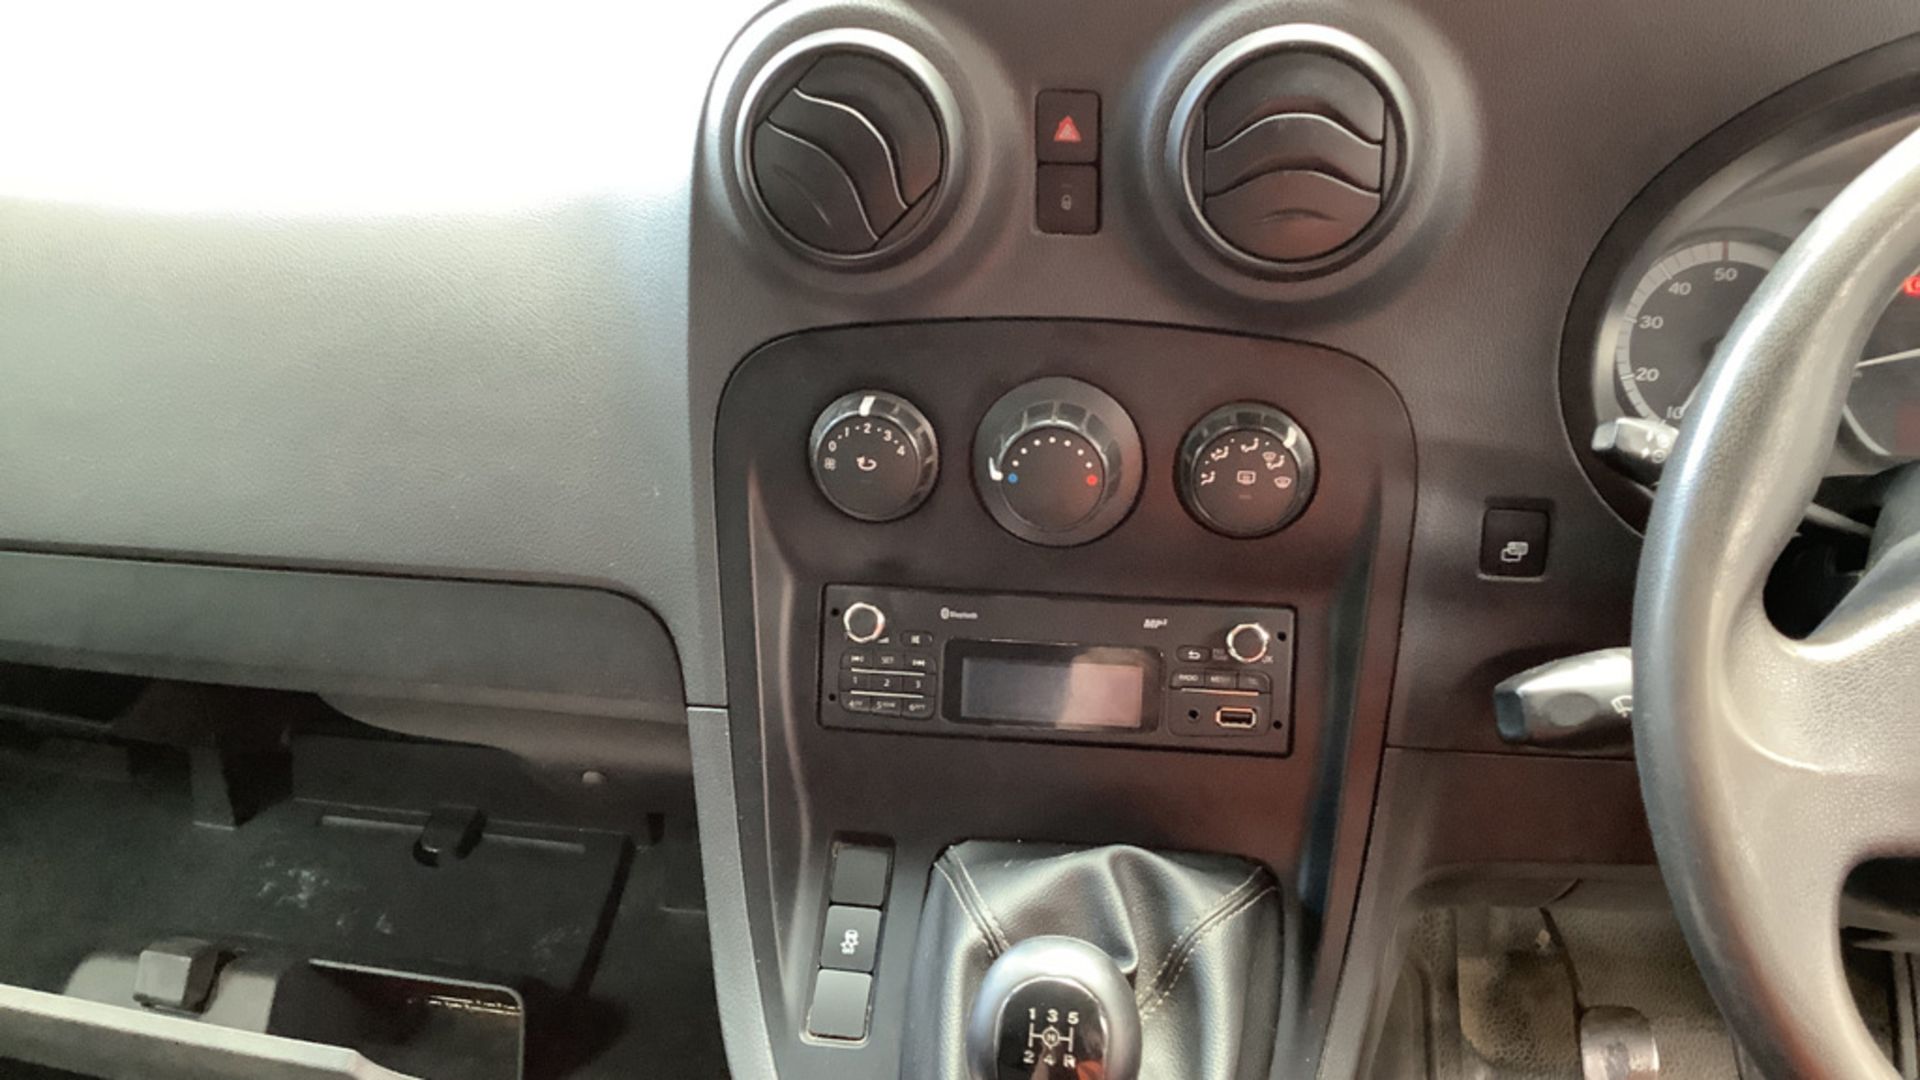 ** ON SALE ** Mercedes Benz Citan 109 1.5 CDI Long 2016 '16 Reg' - Panel Van - Image 8 of 8